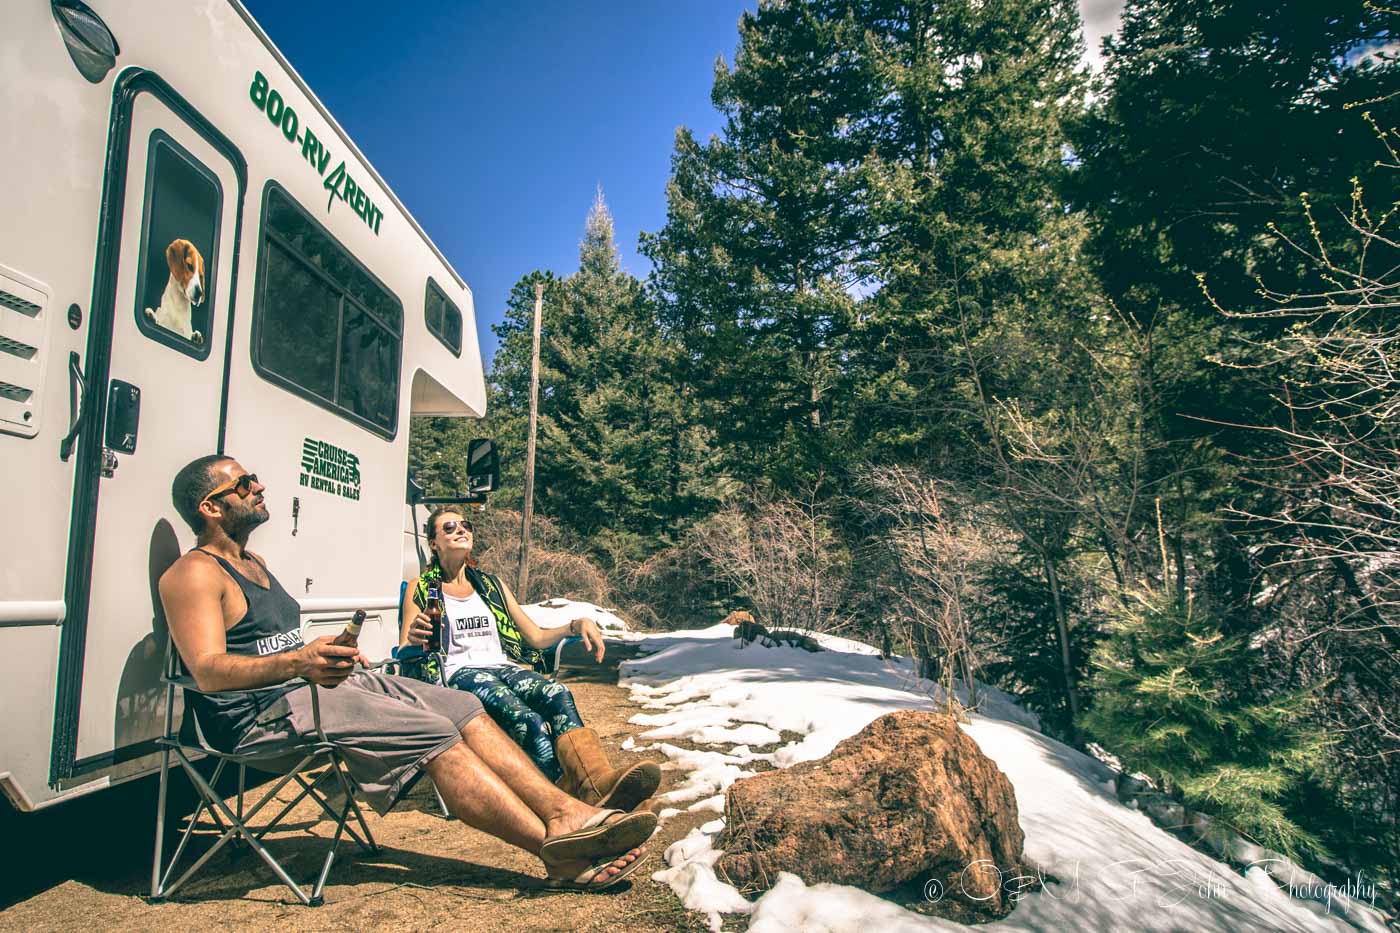 Max & Oksana having lunch near camper van in Colorado. USA Road trip